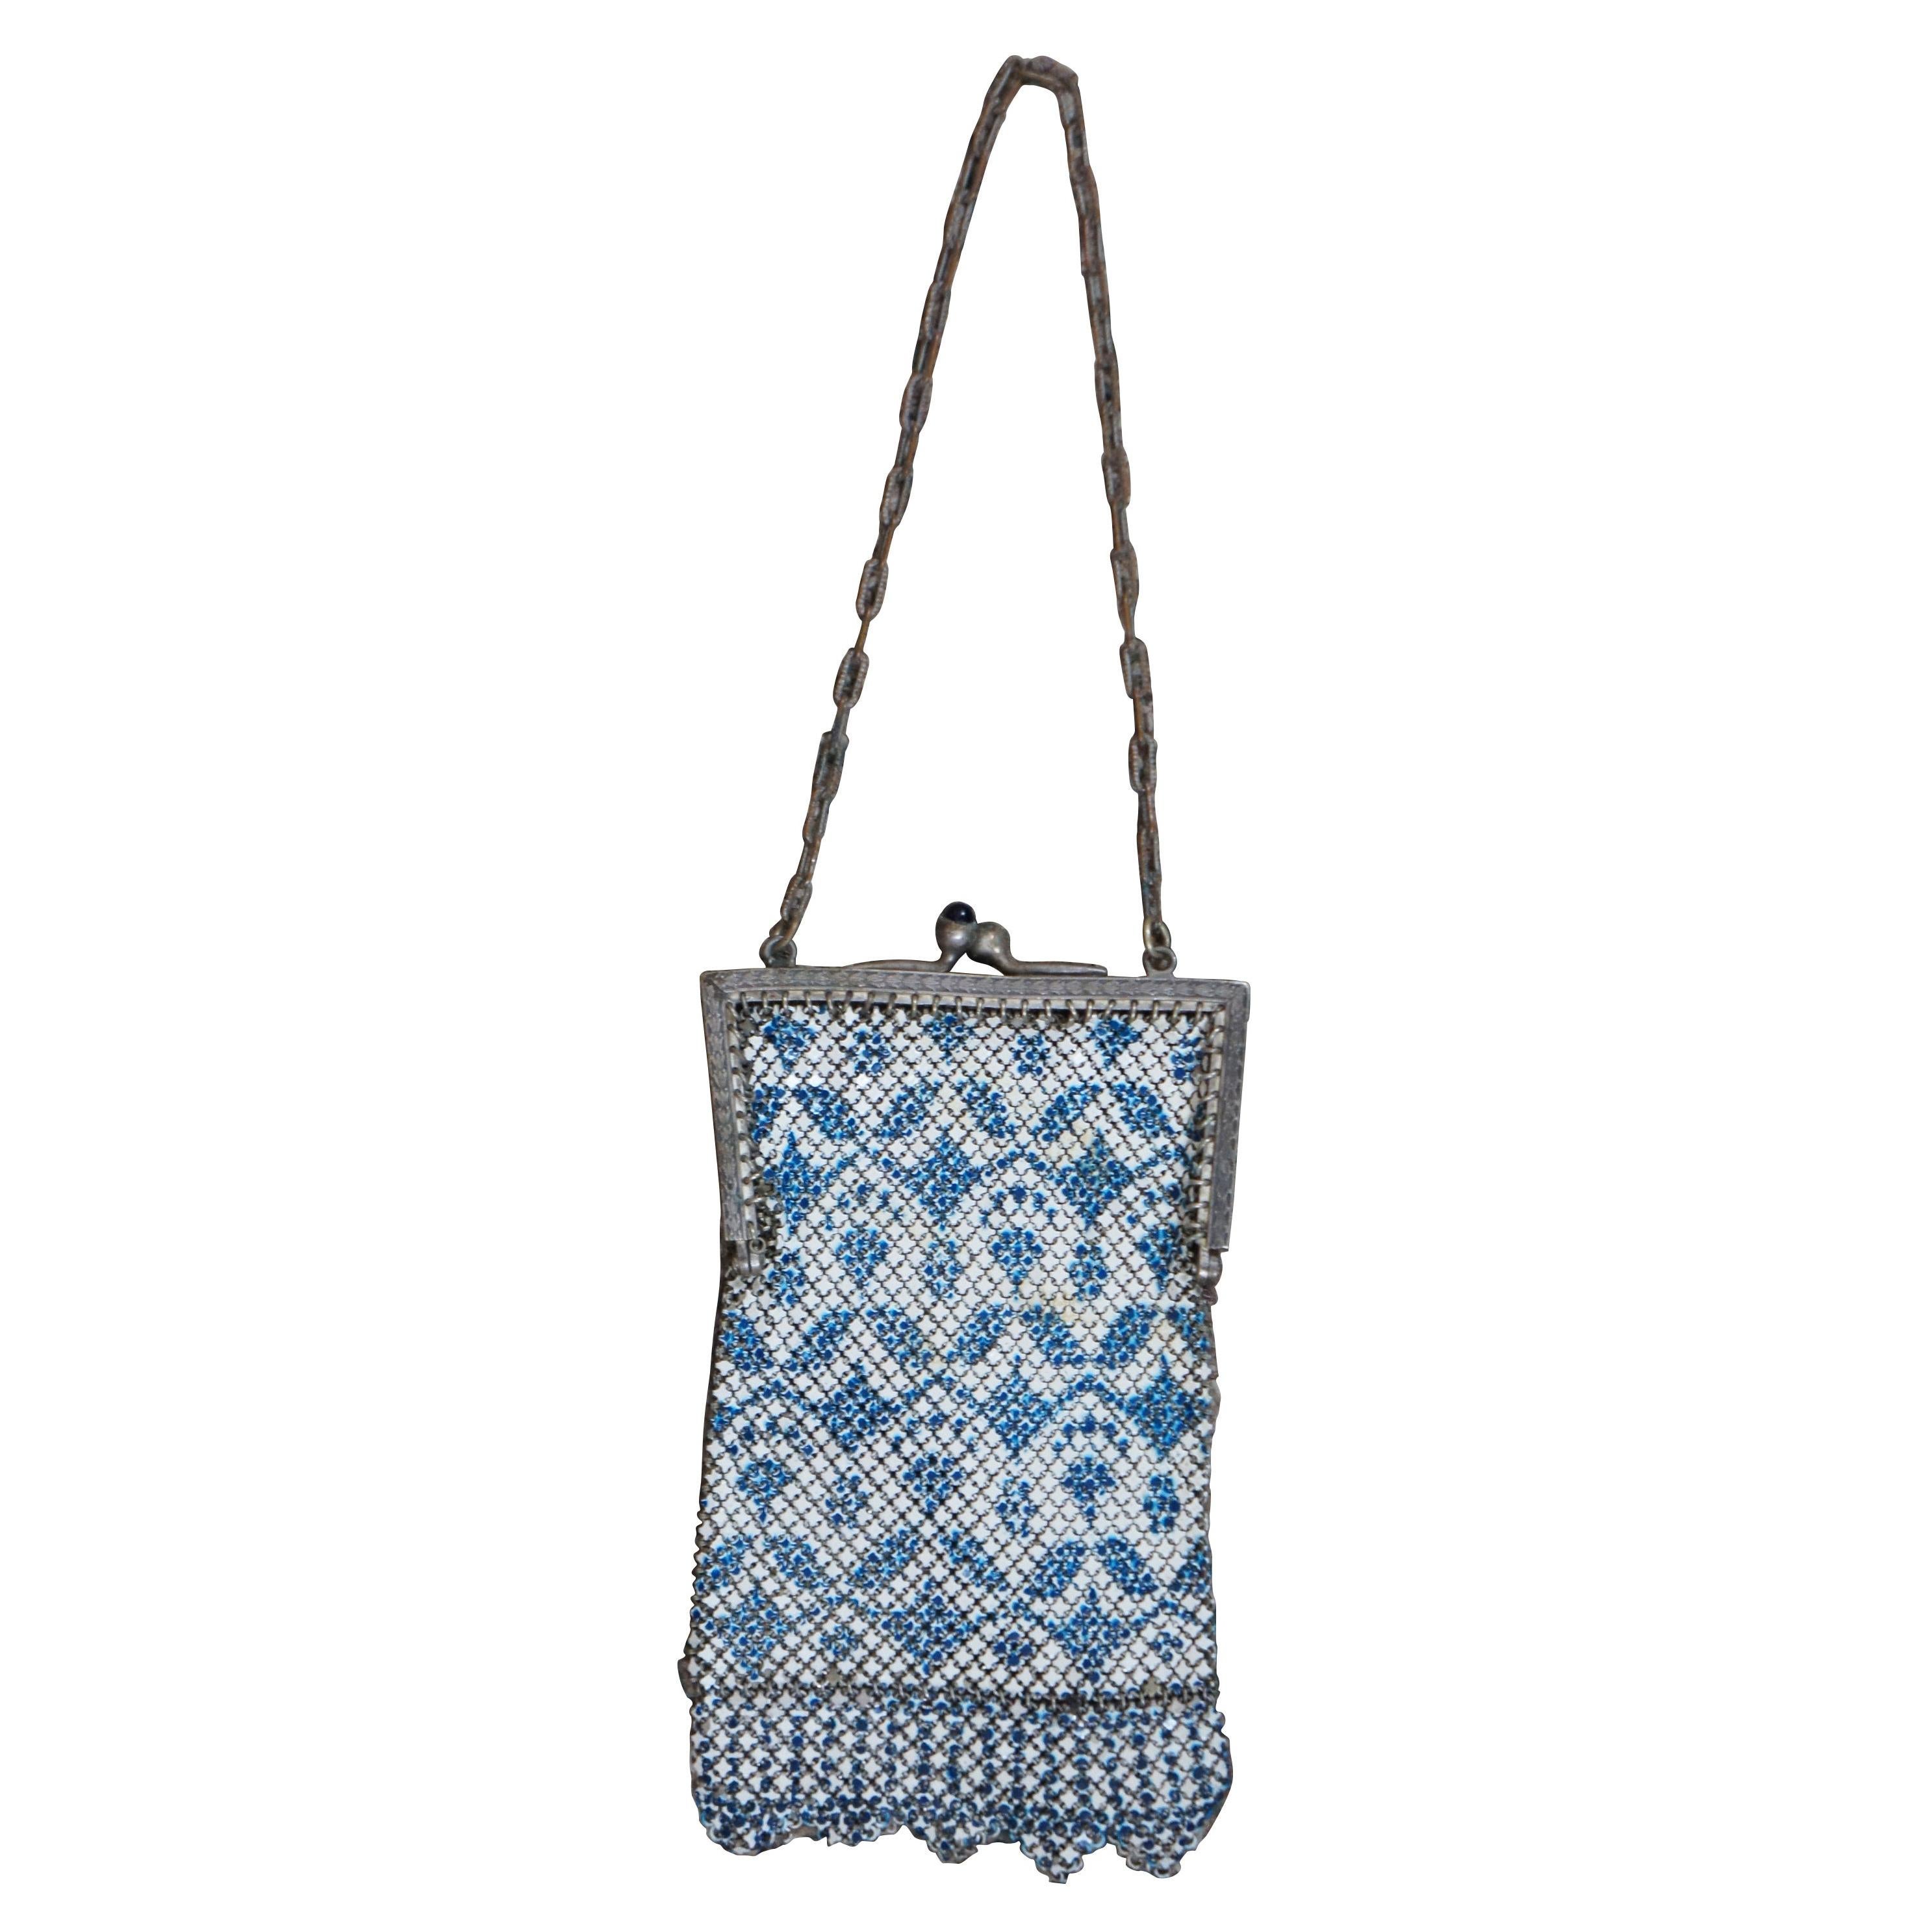 Antique Mandalian Art Deco Enamel Mesh Purse Handbag Blue White Flapper Boho